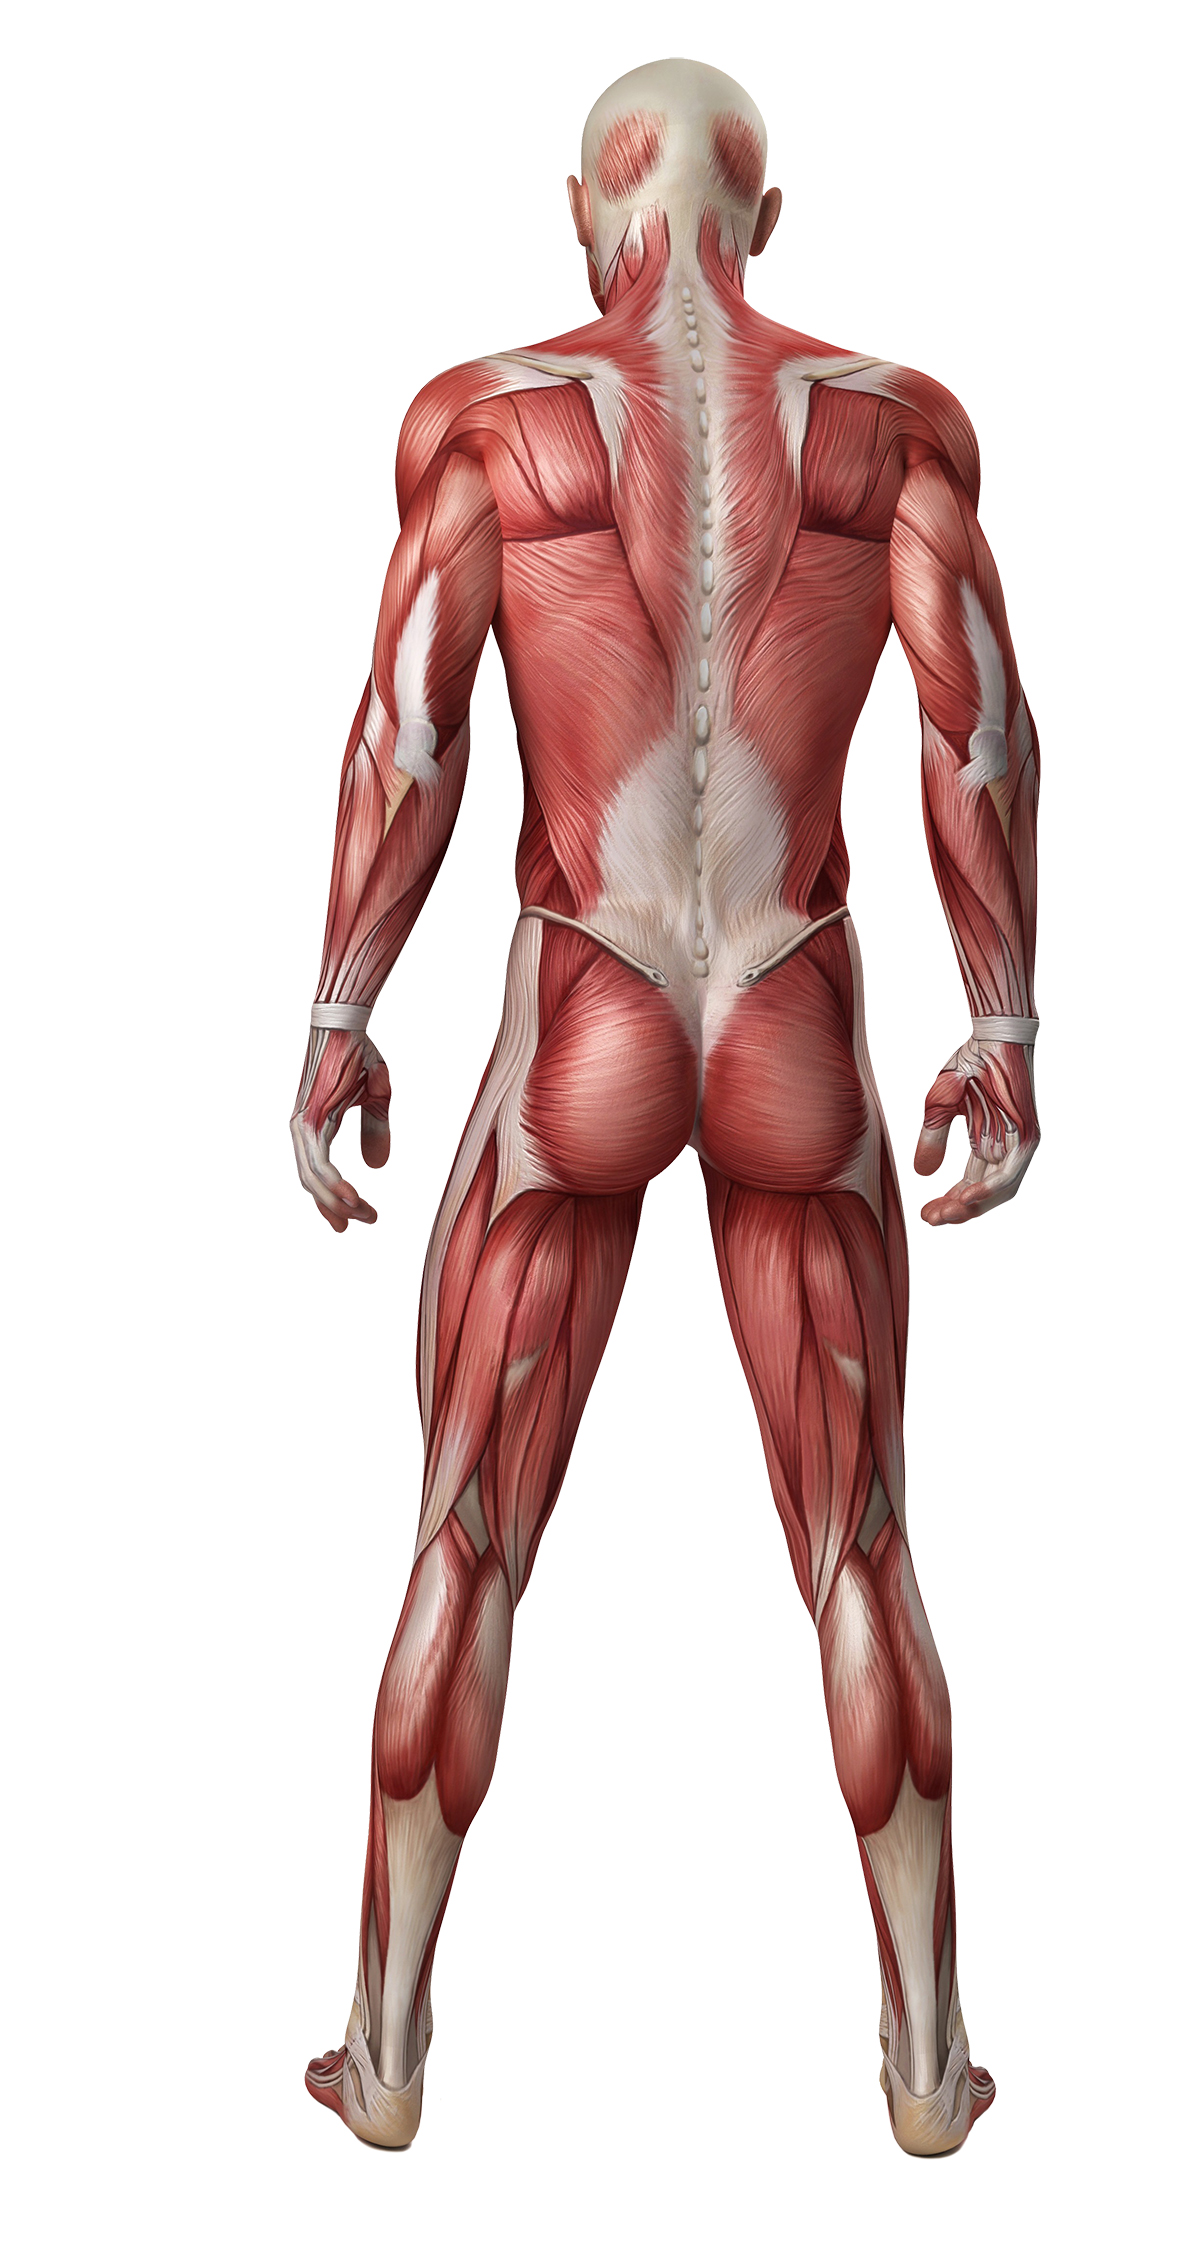 Human muscular system